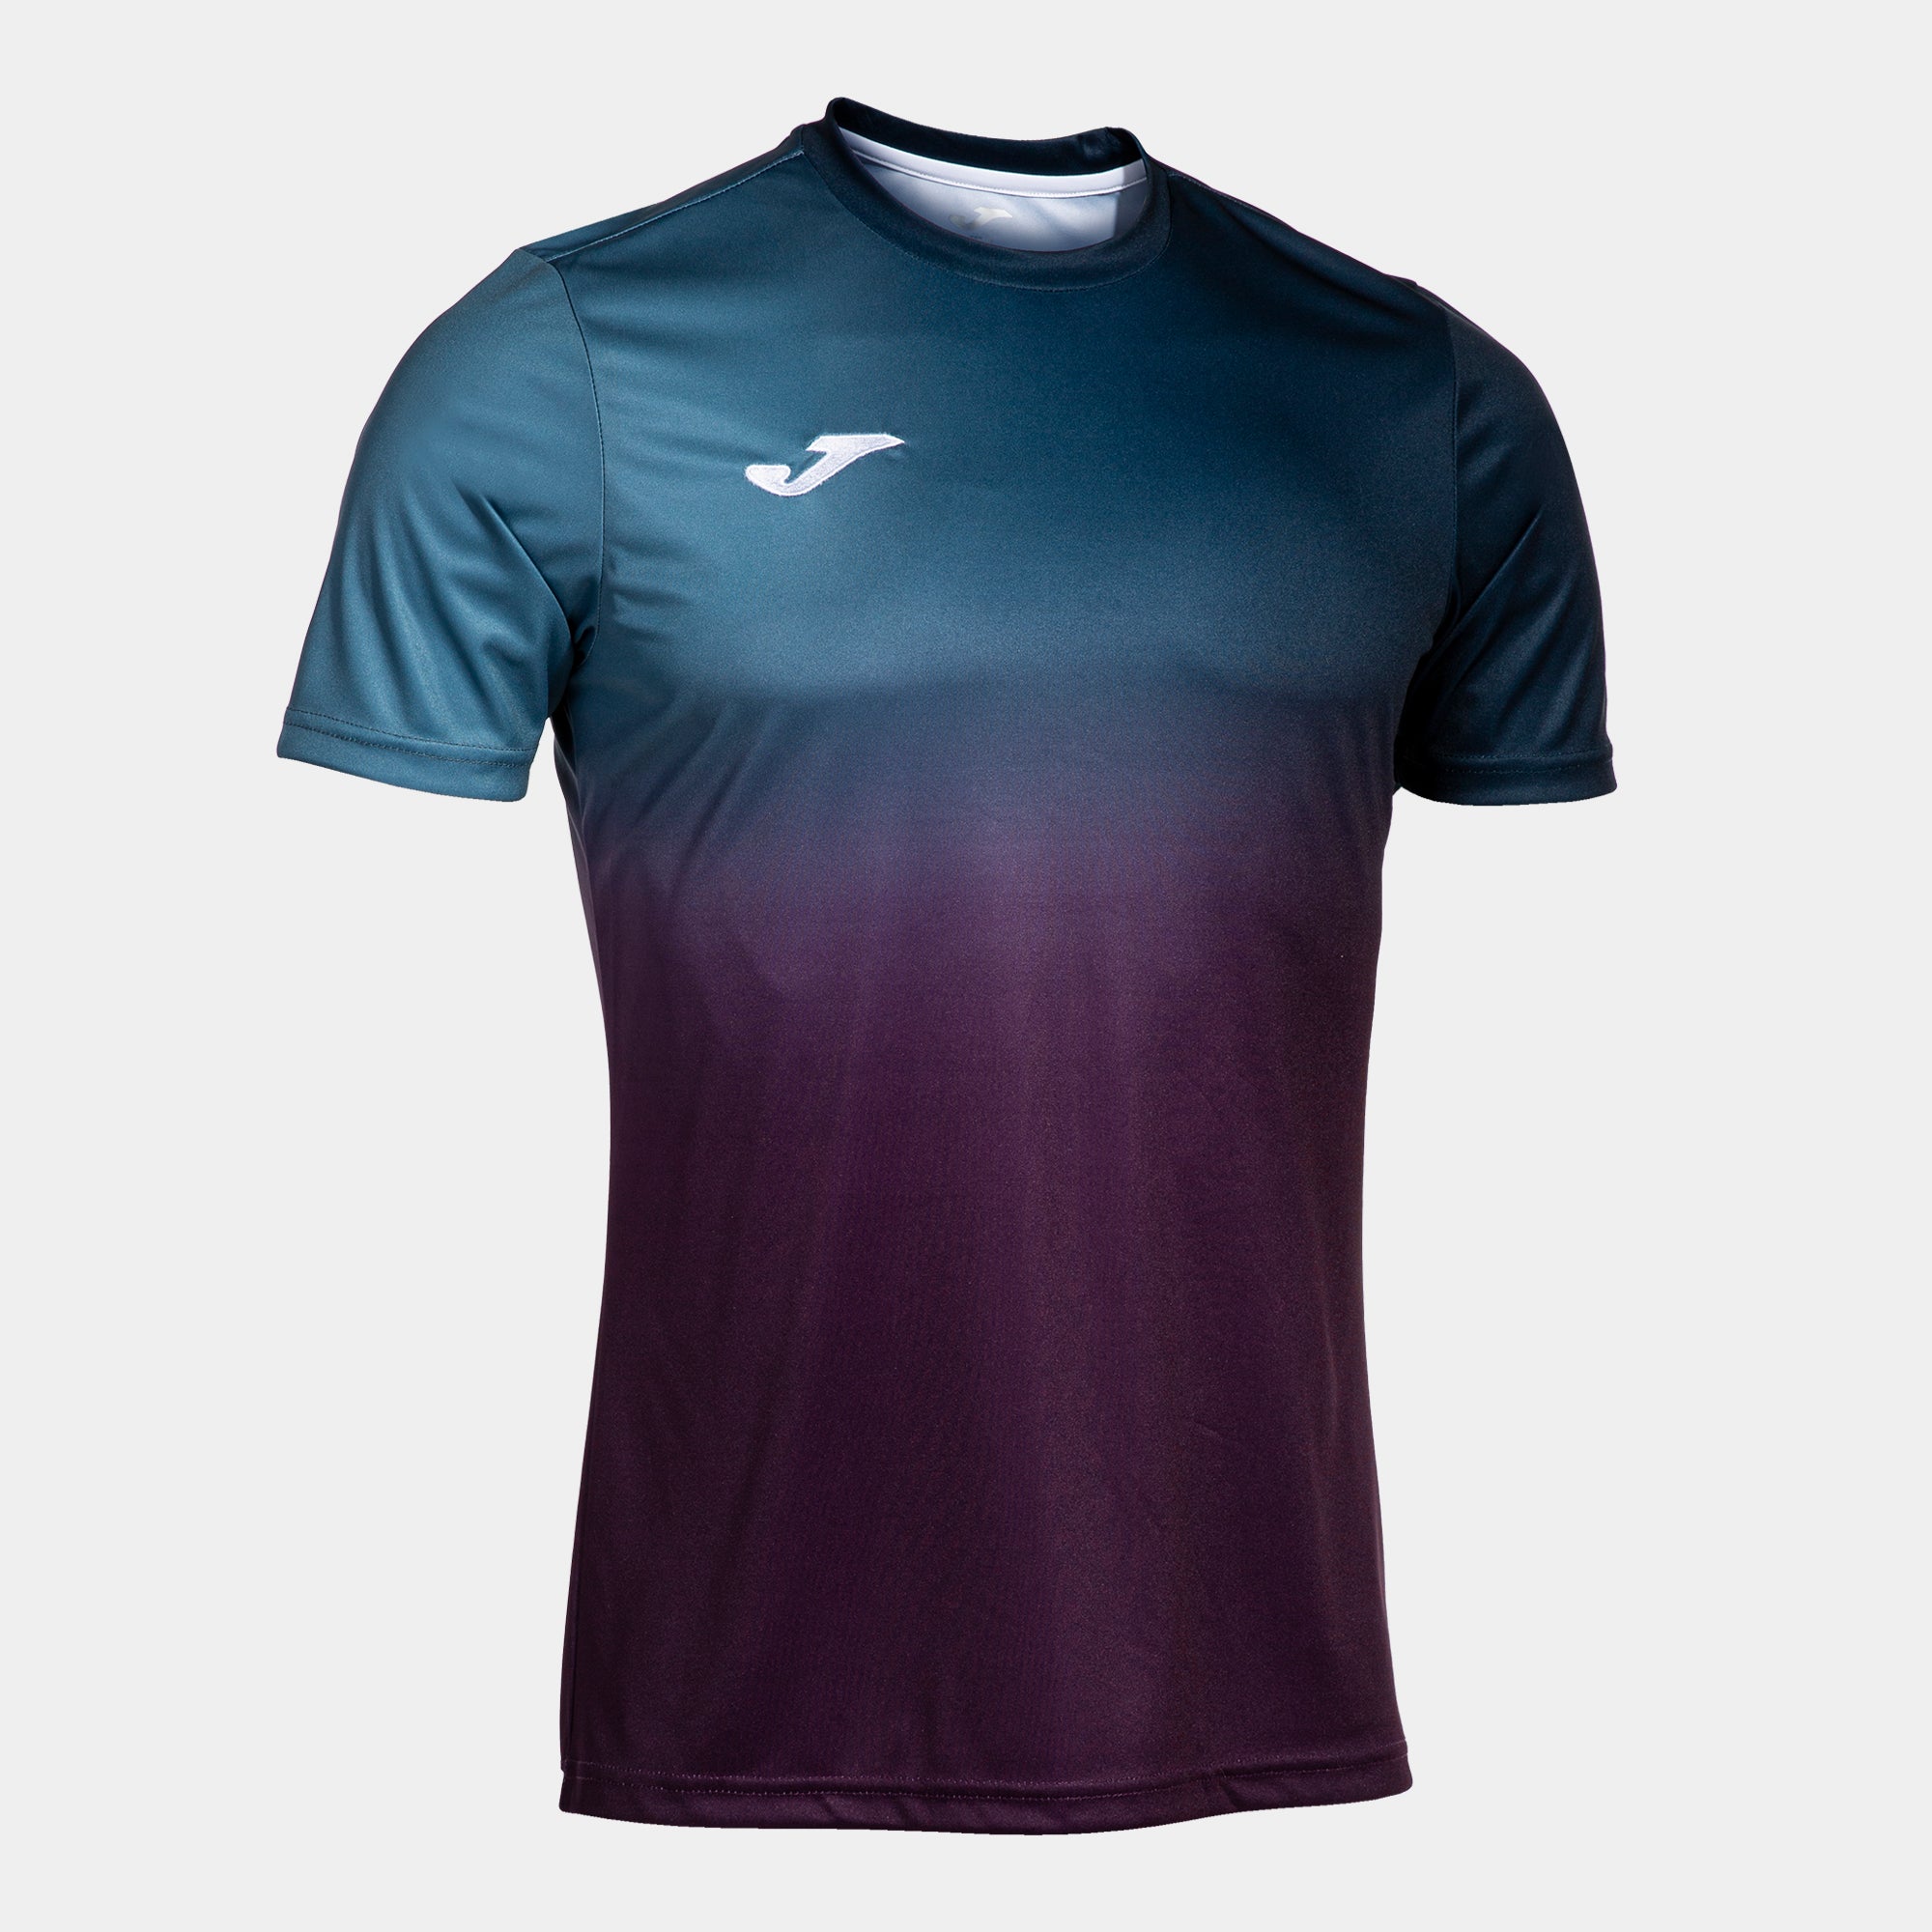 Joma ProTeam Short Sleeved T-Shirt - Potent Purple/Captain Blue/Dark Navy